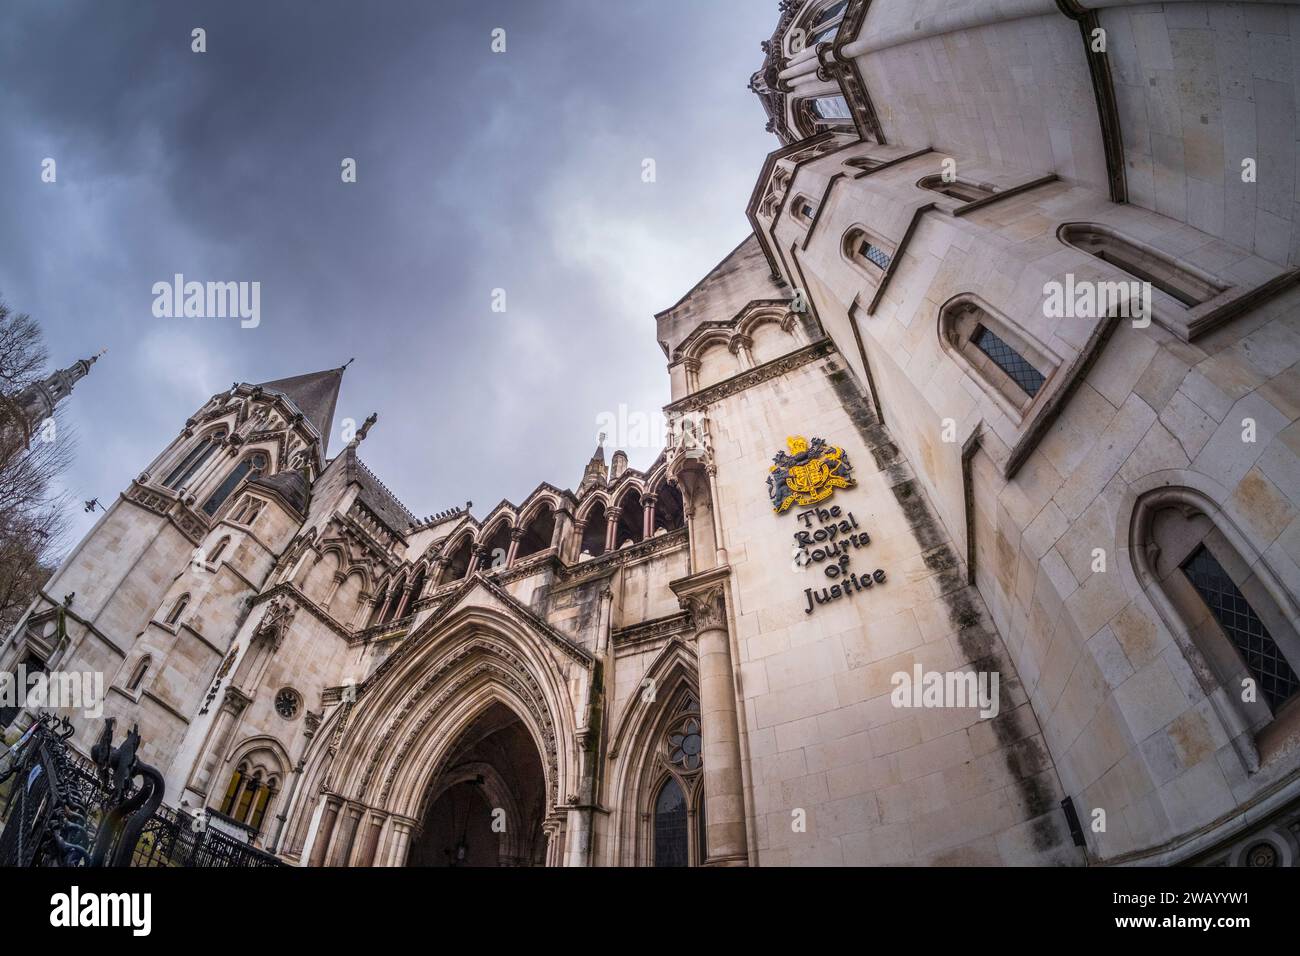 Die Royal Courts of Justice, The Law Courts, Strand, London, UK. Düsterer, elender, regenbedrohlicher Himmel. Stockfoto